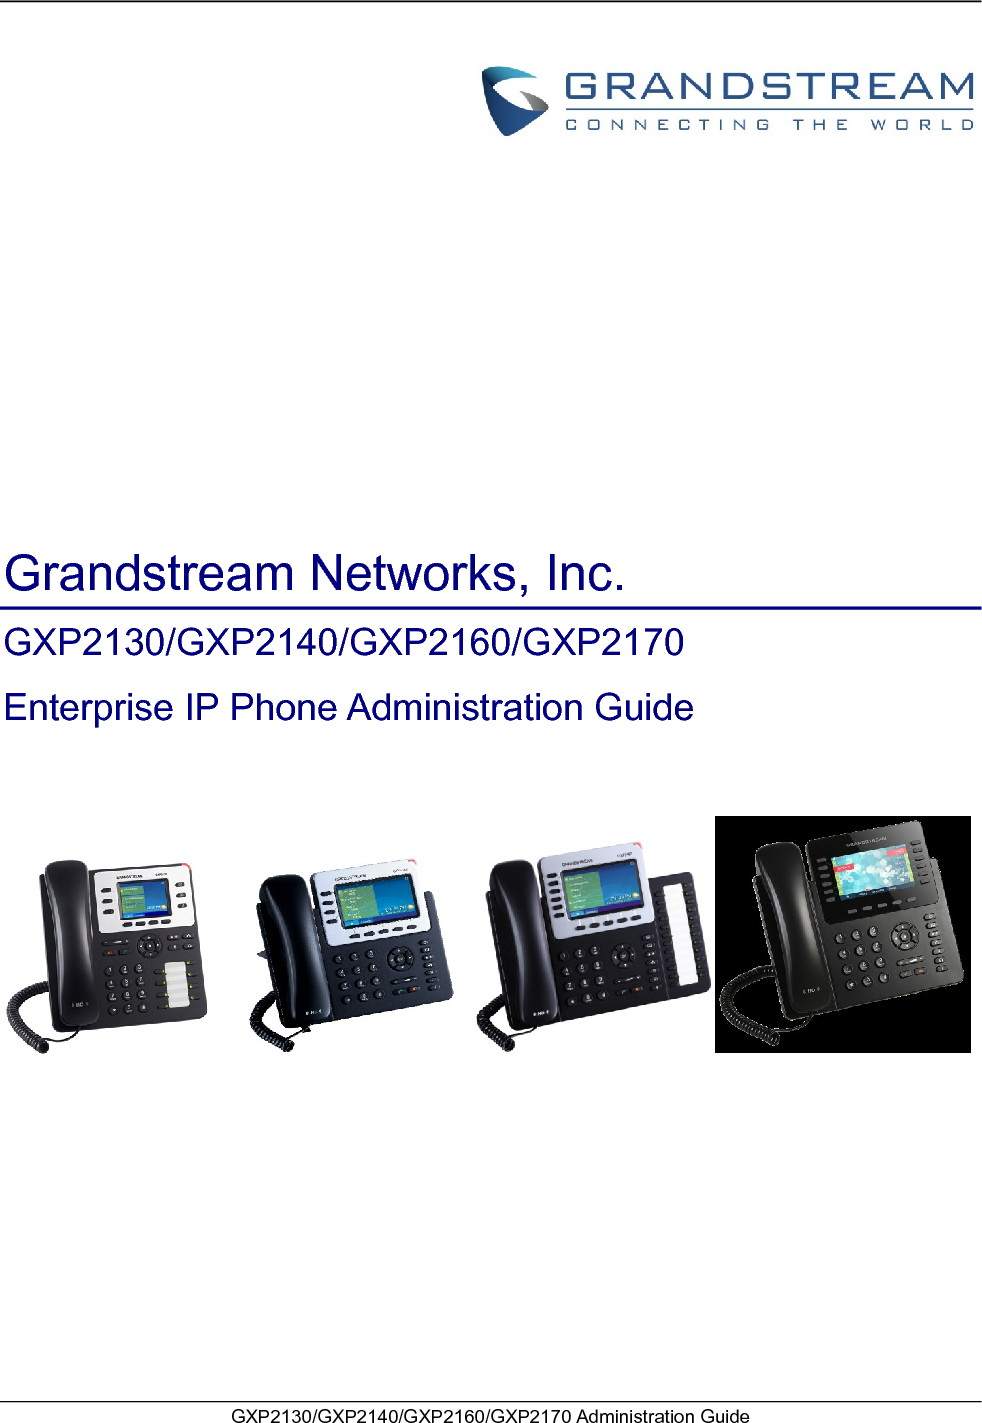   GXP2130/GXP2140/GXP2160/GXP2170 Administration Guide                                                    Grandstream Networks, Inc. GXP2130/GXP2140/GXP2160/GXP2170 Enterprise IP Phone Administration Guide          